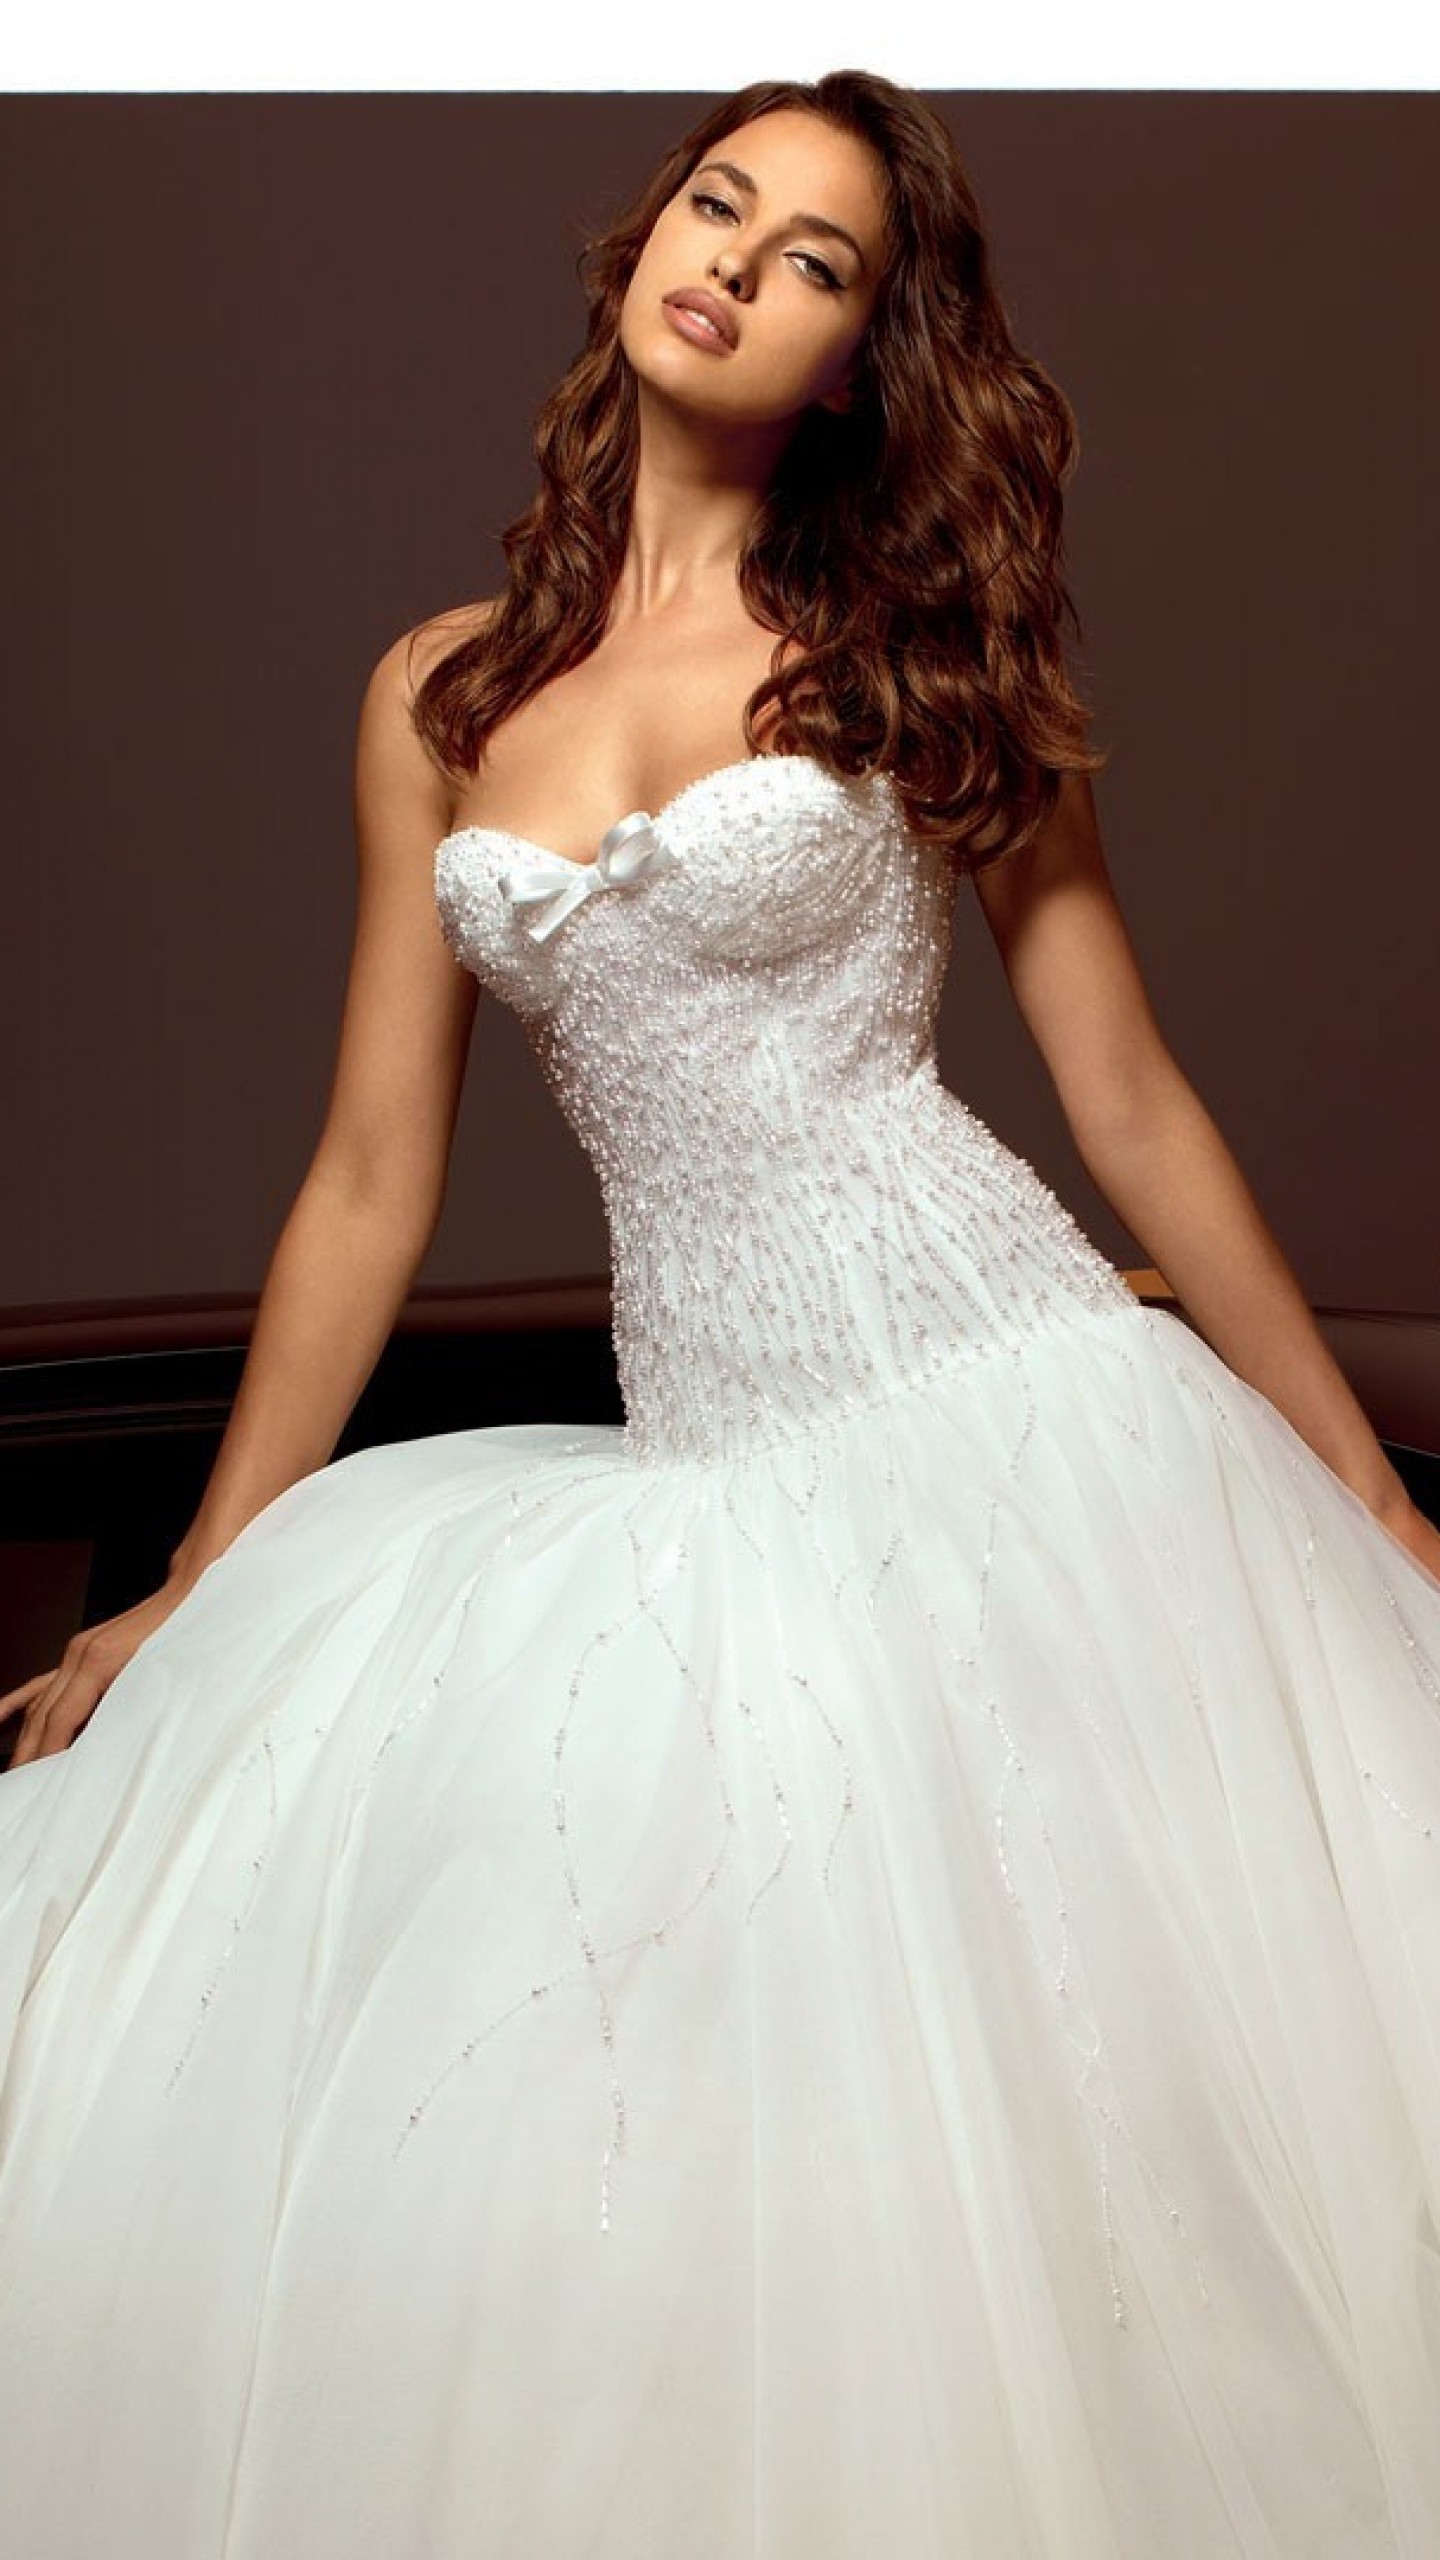 1440x2560  Wallpaper irina shayk, wedding dress, photo shoot